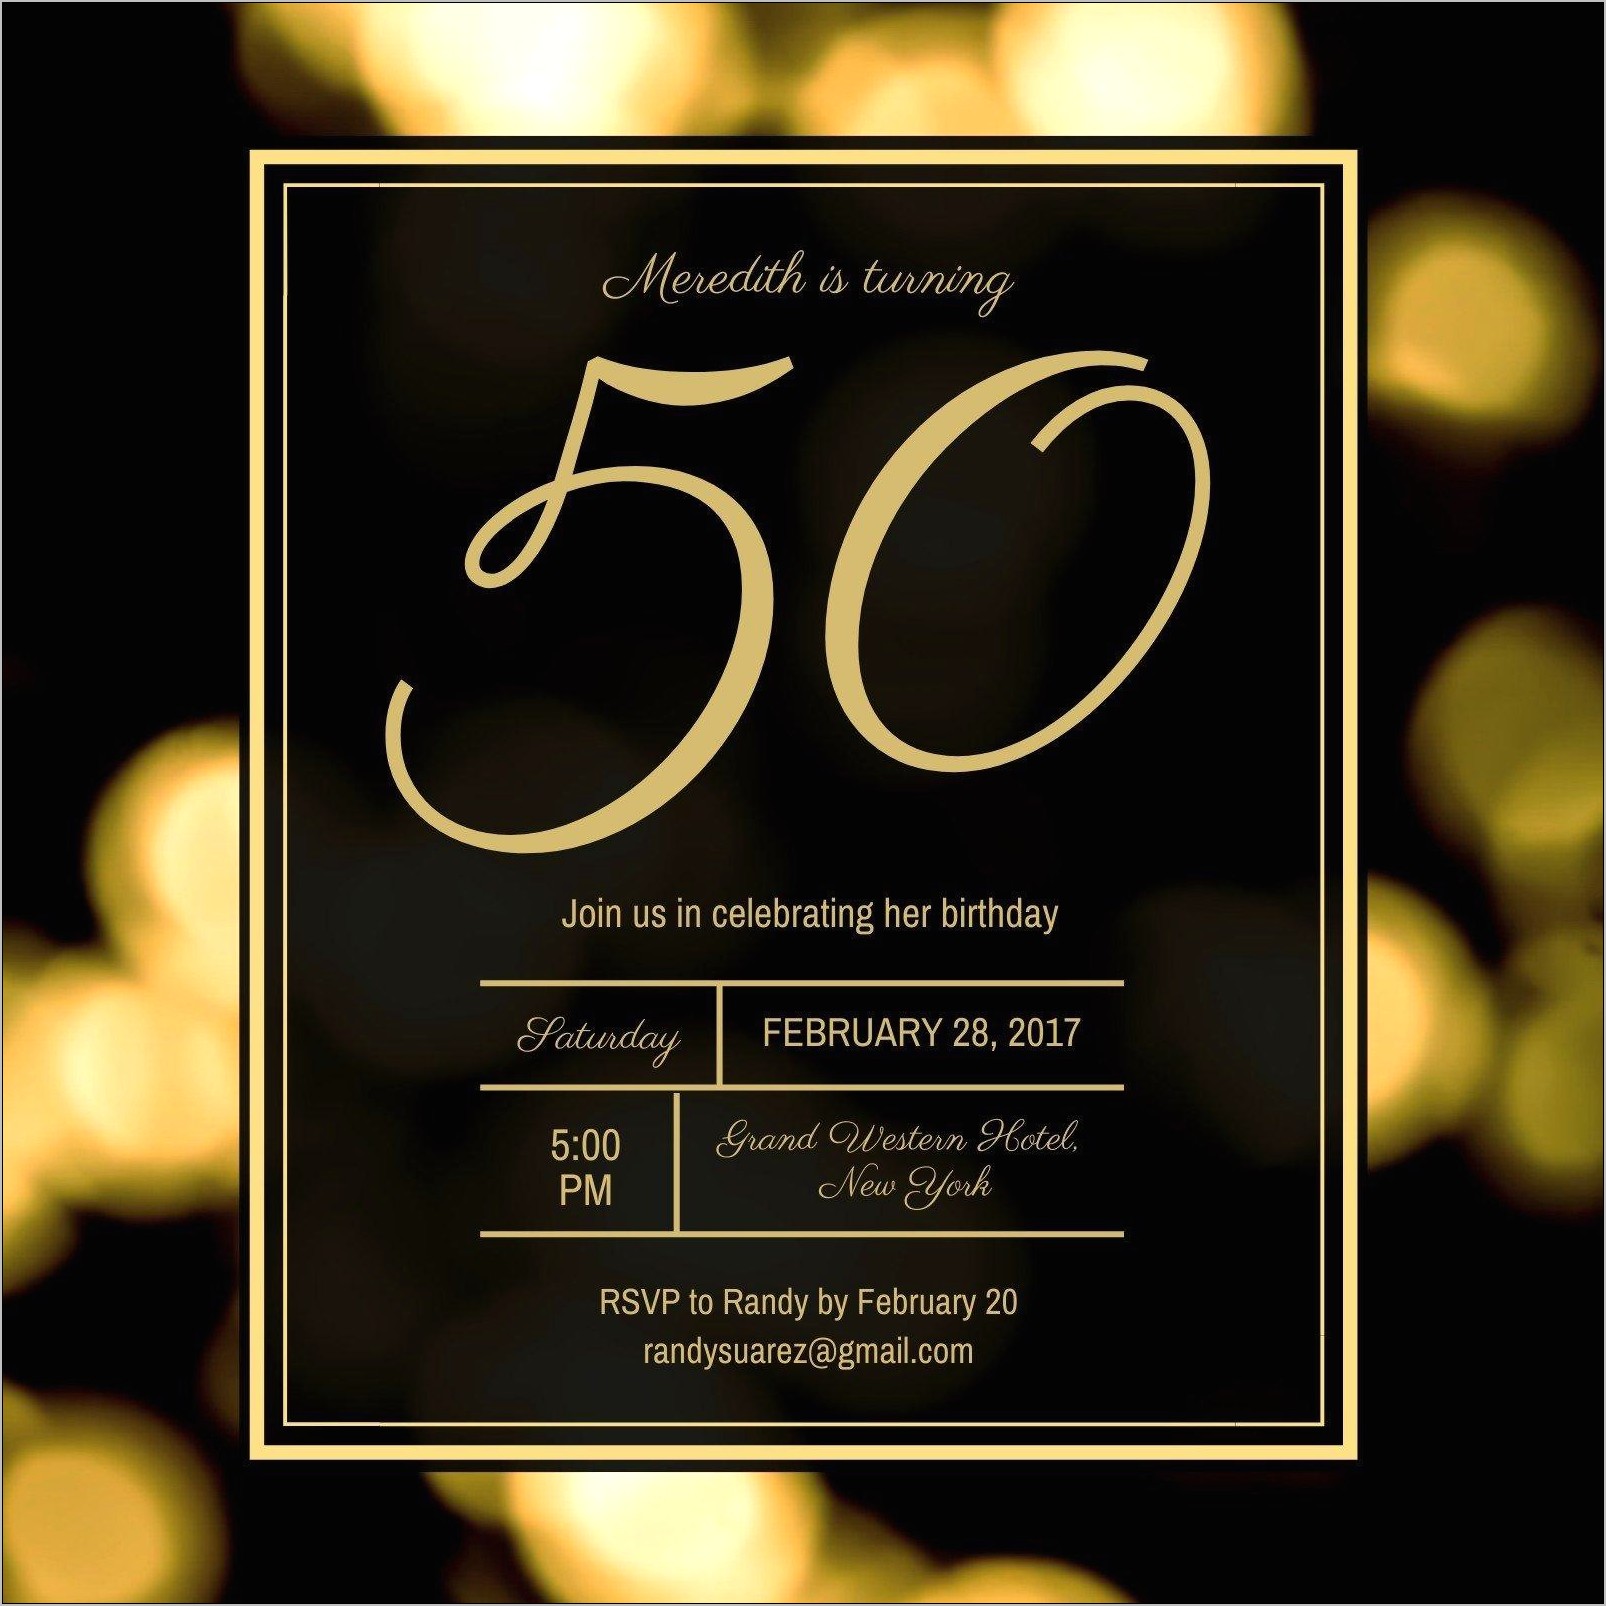 50th Birthday Invitations Free Printable Template